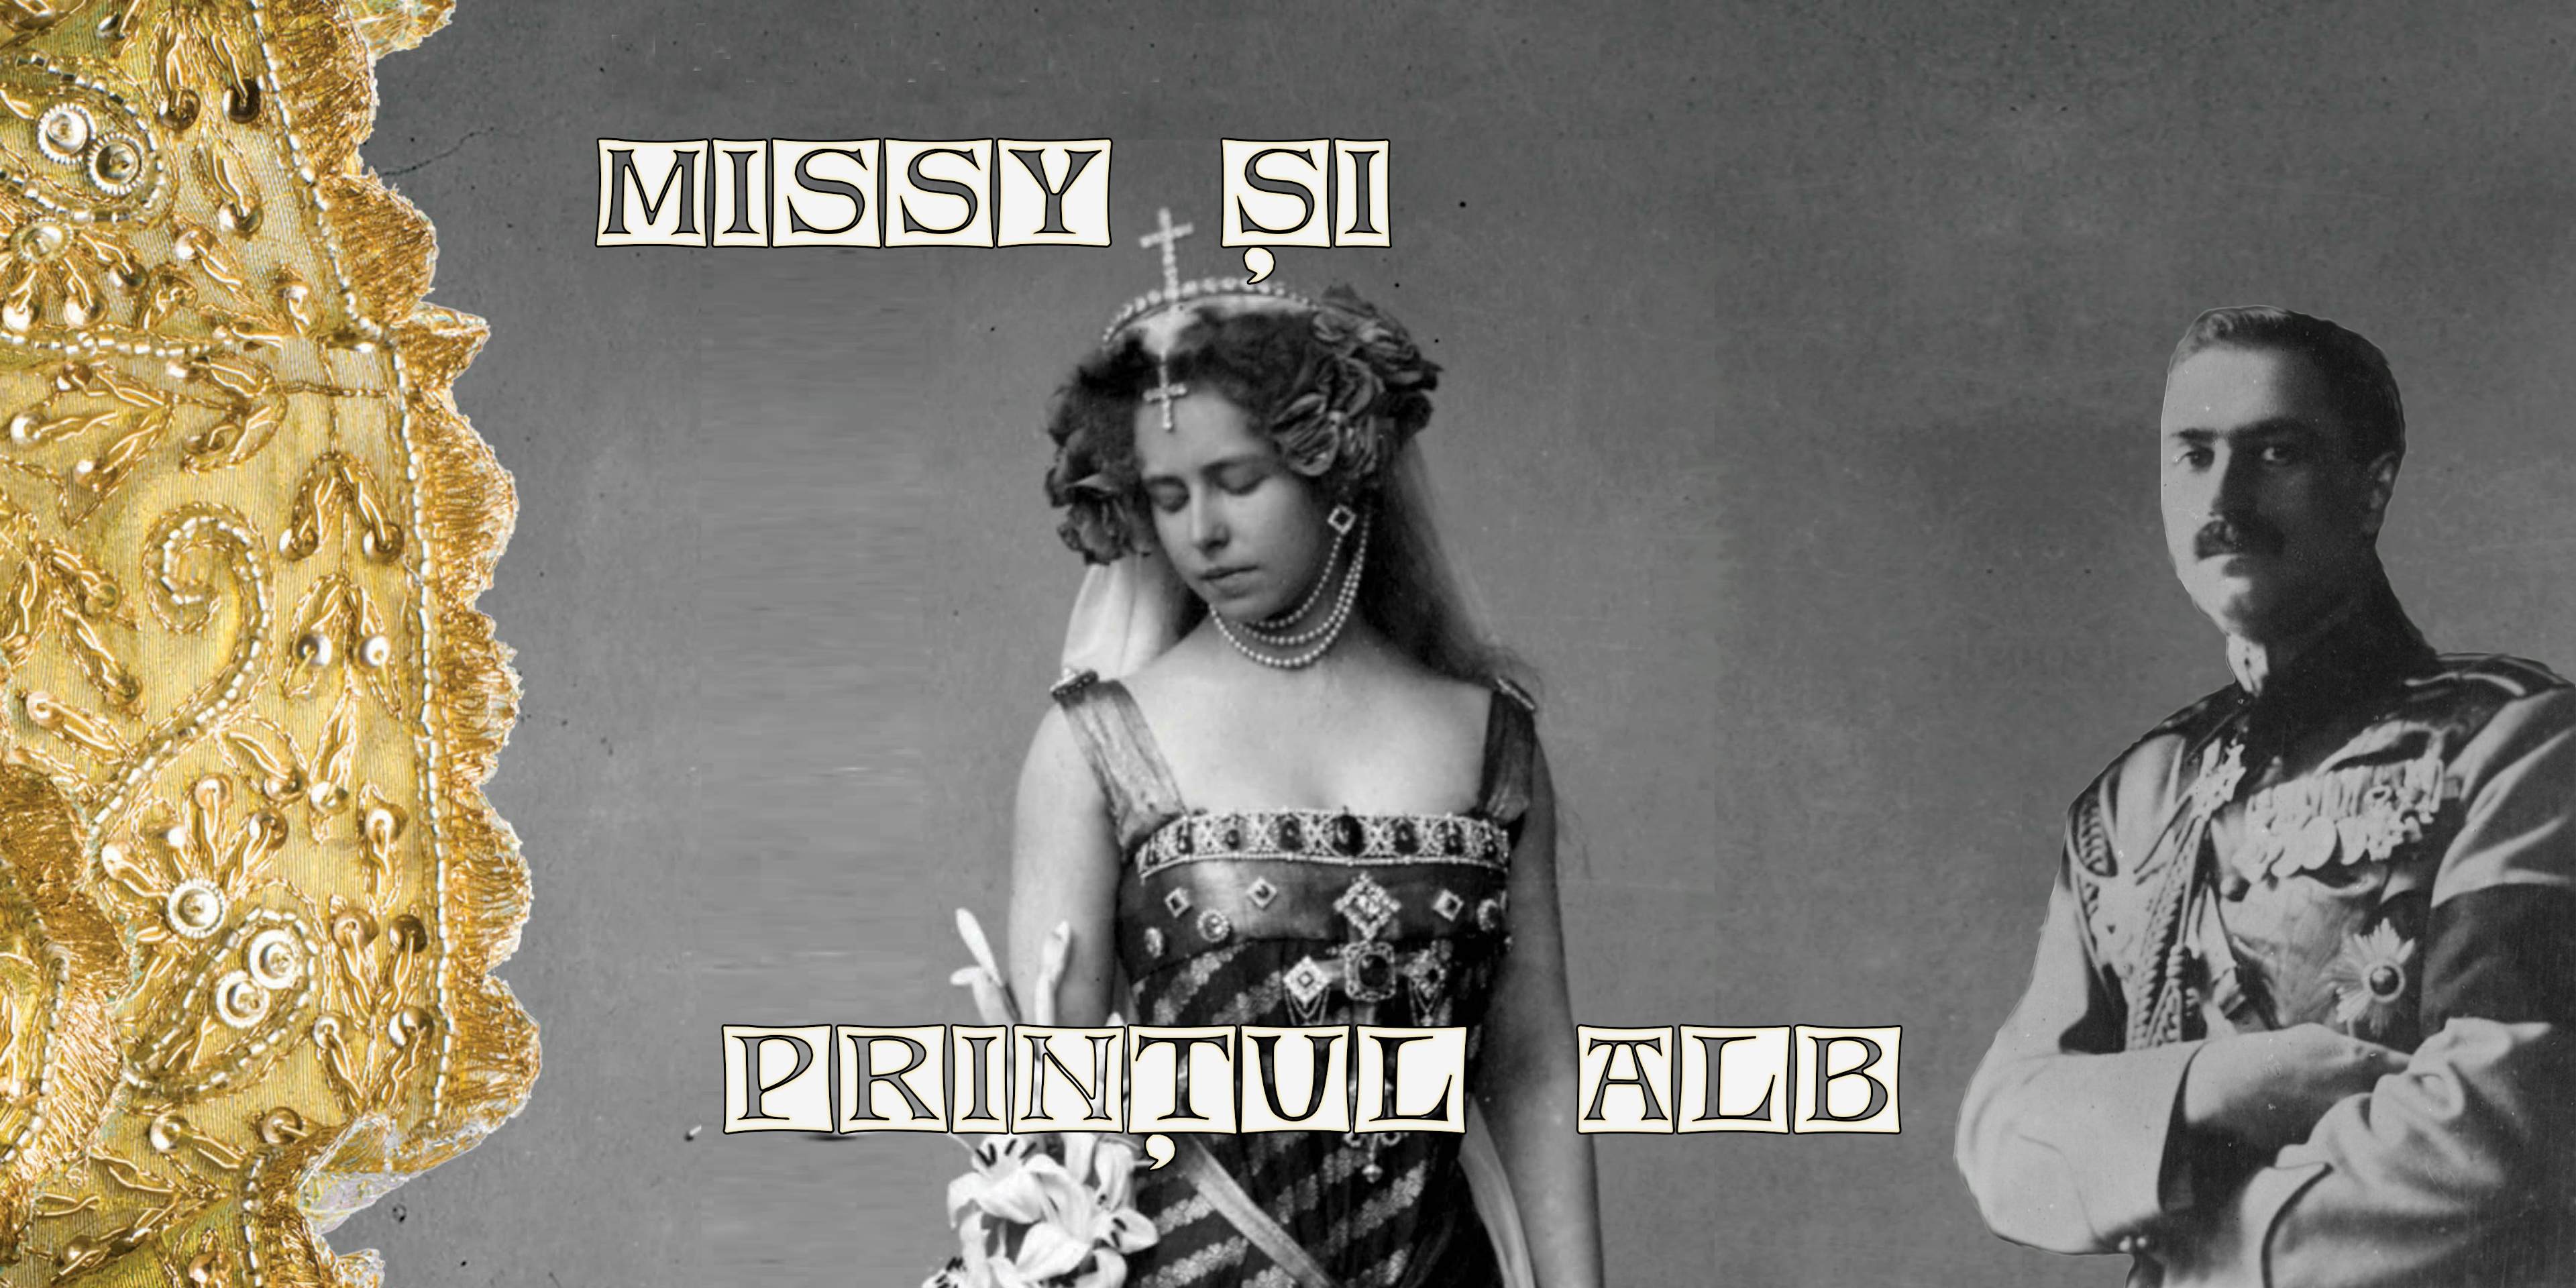 Missy si Prințul Alb image